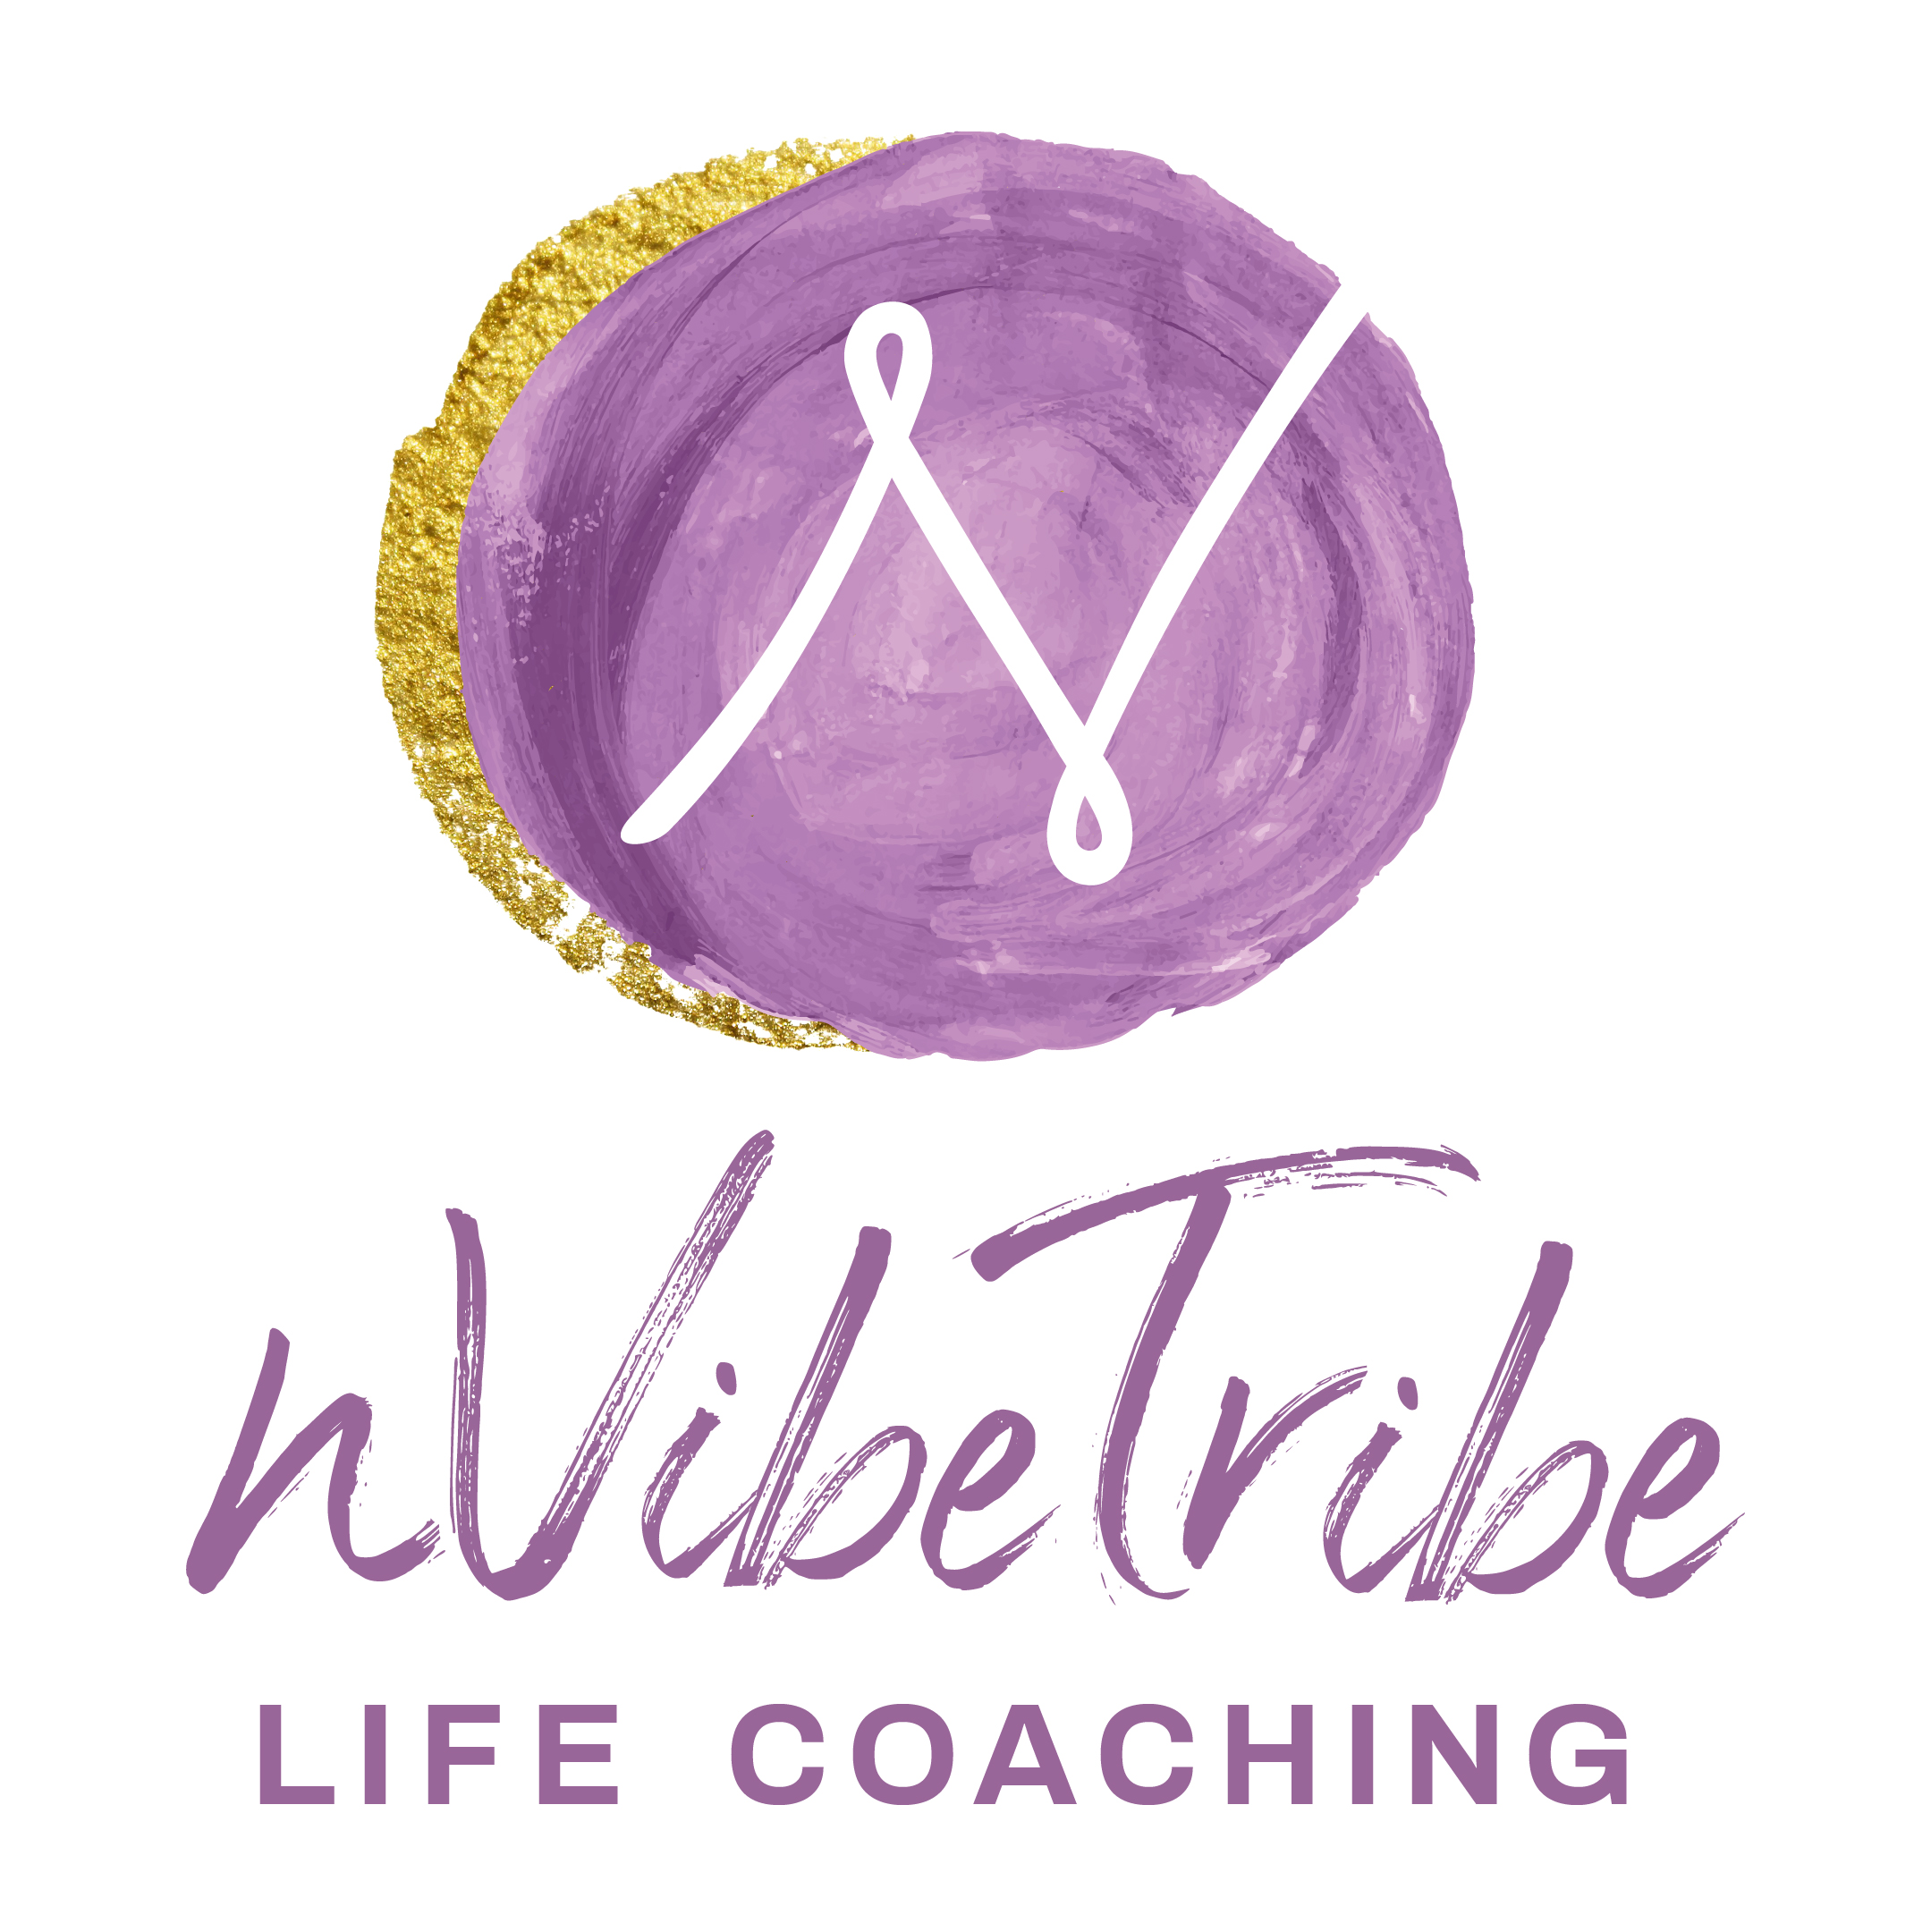 nVibeTribe Life Coaching